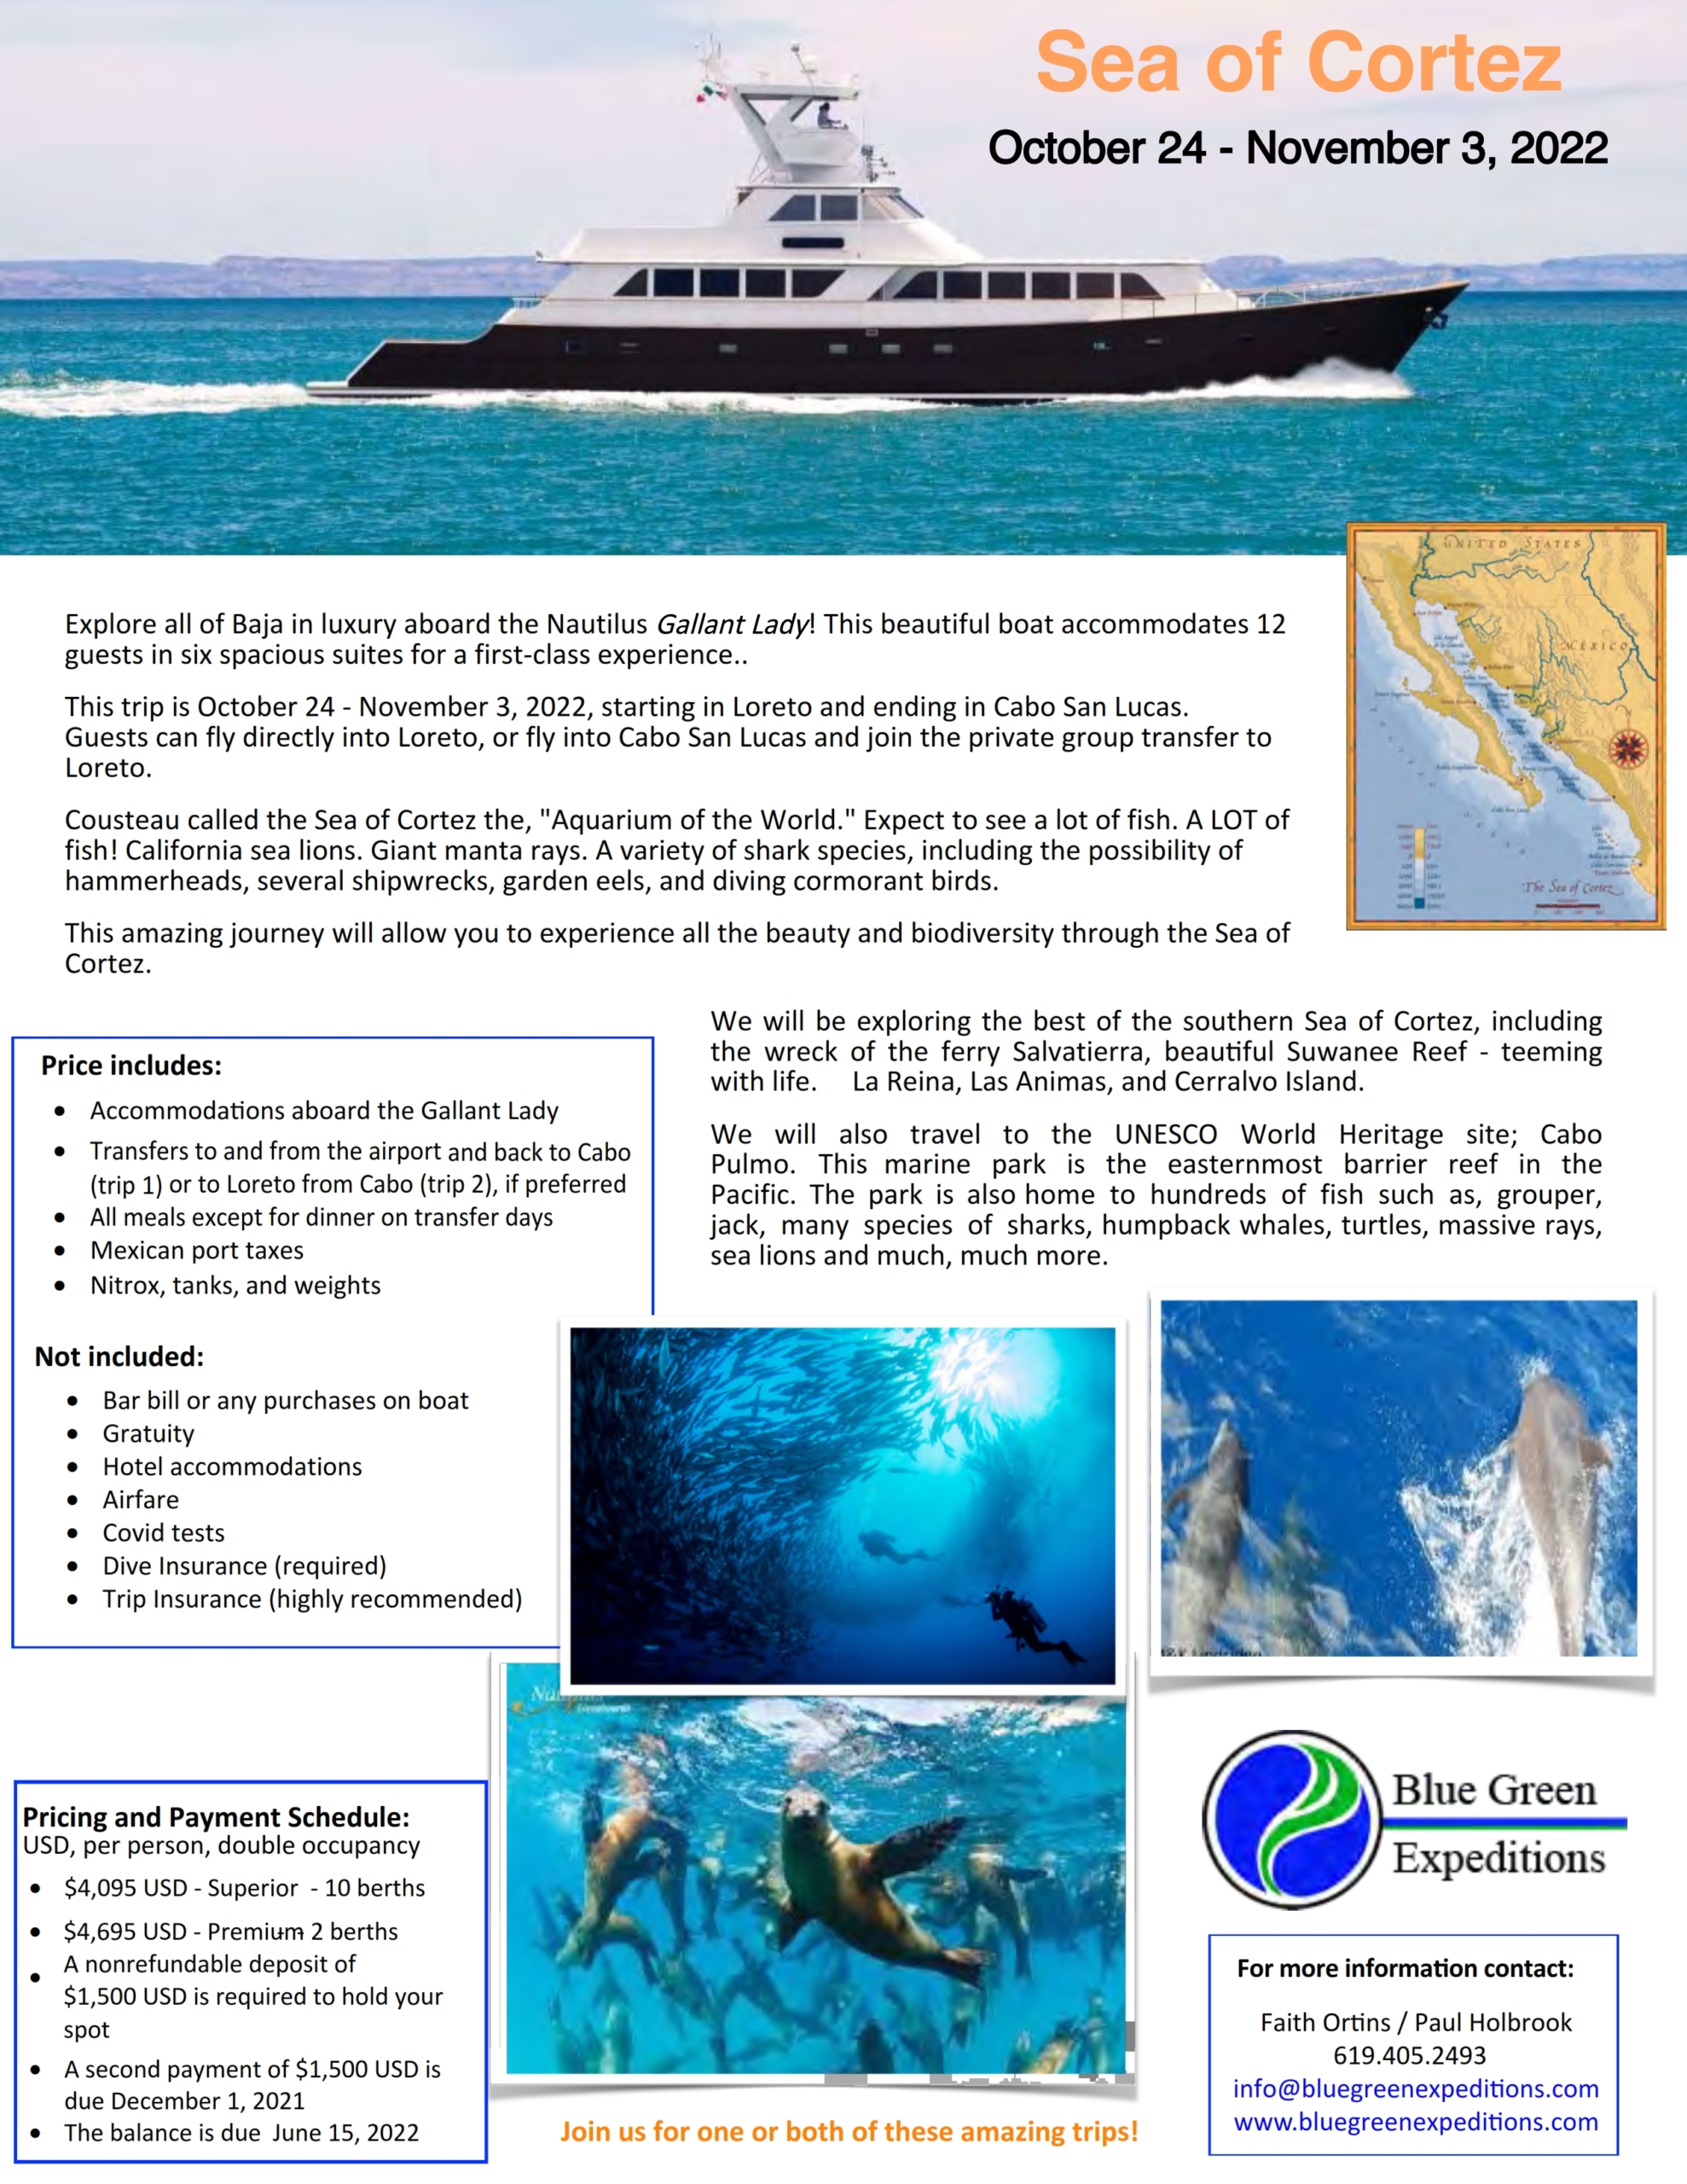 Sea of Cortez expedition: October 24 - November 3, 2022